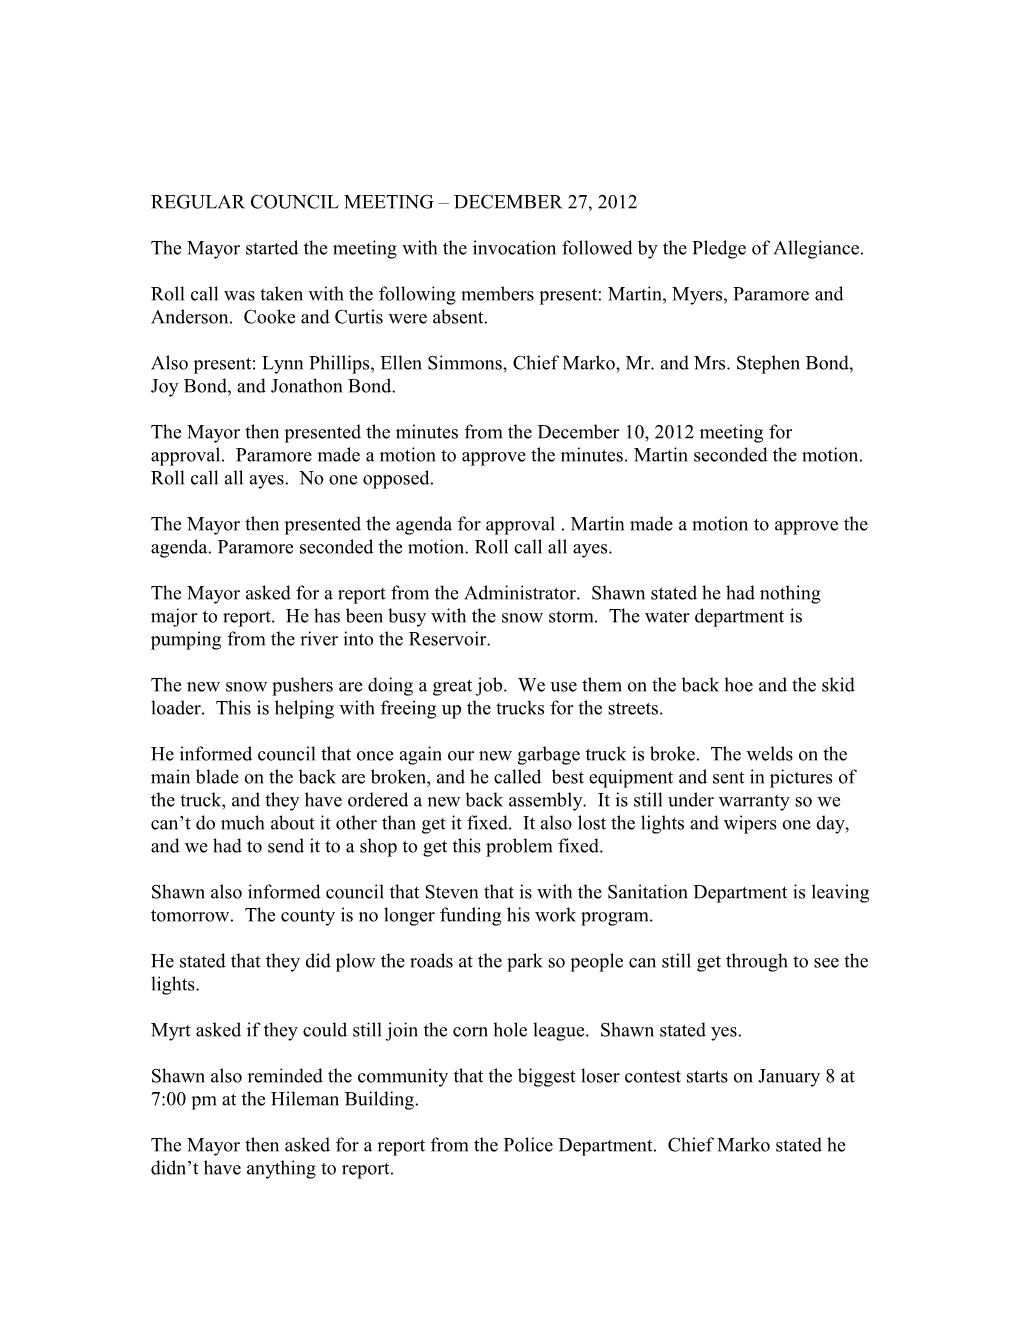 Regular Council Meeting December 27, 2012